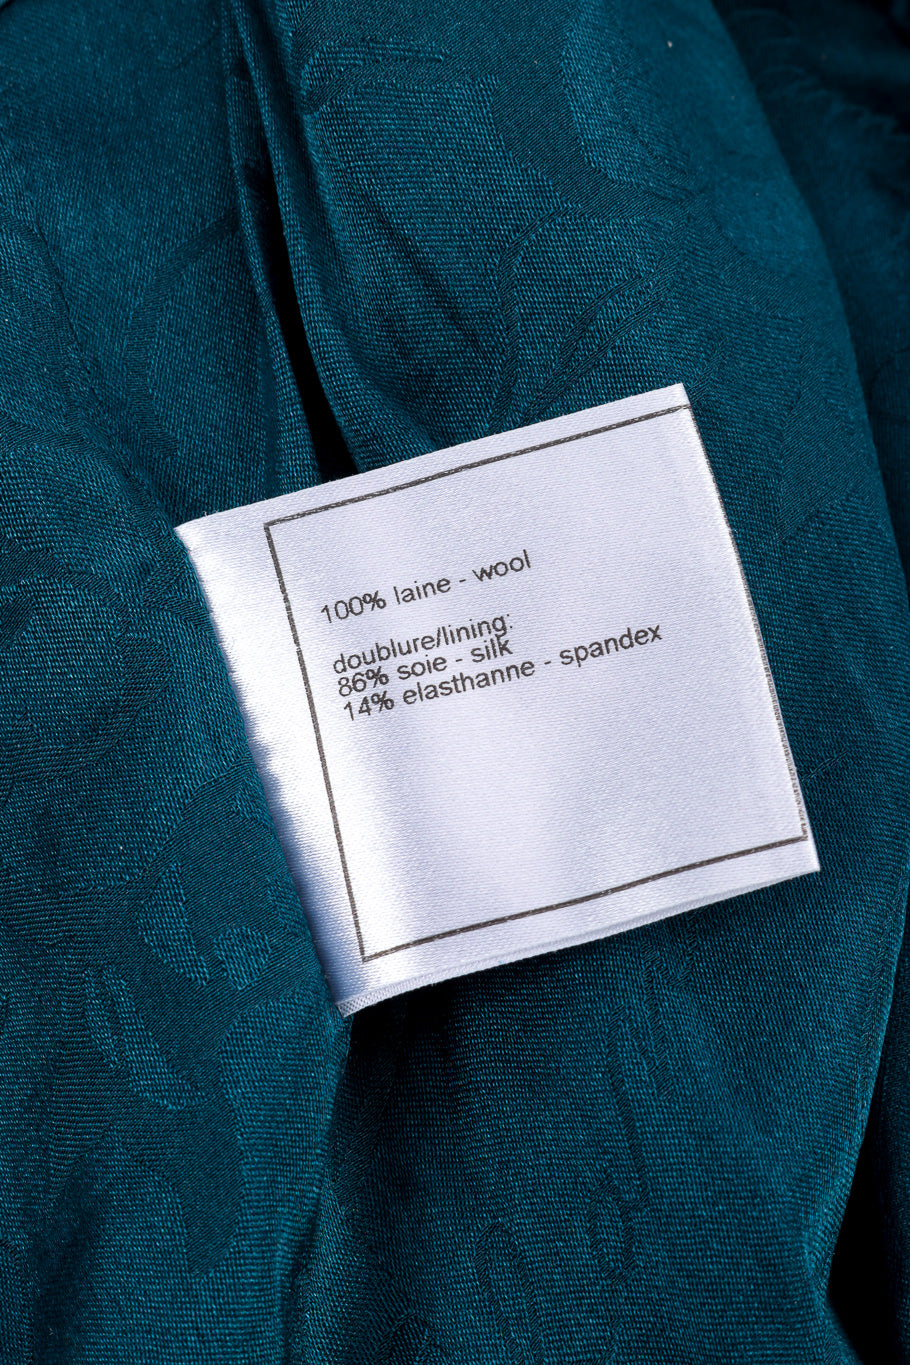 2008A Wool Carwash Hem Jacket & Skirt Set jacket fabric content label @Recessla